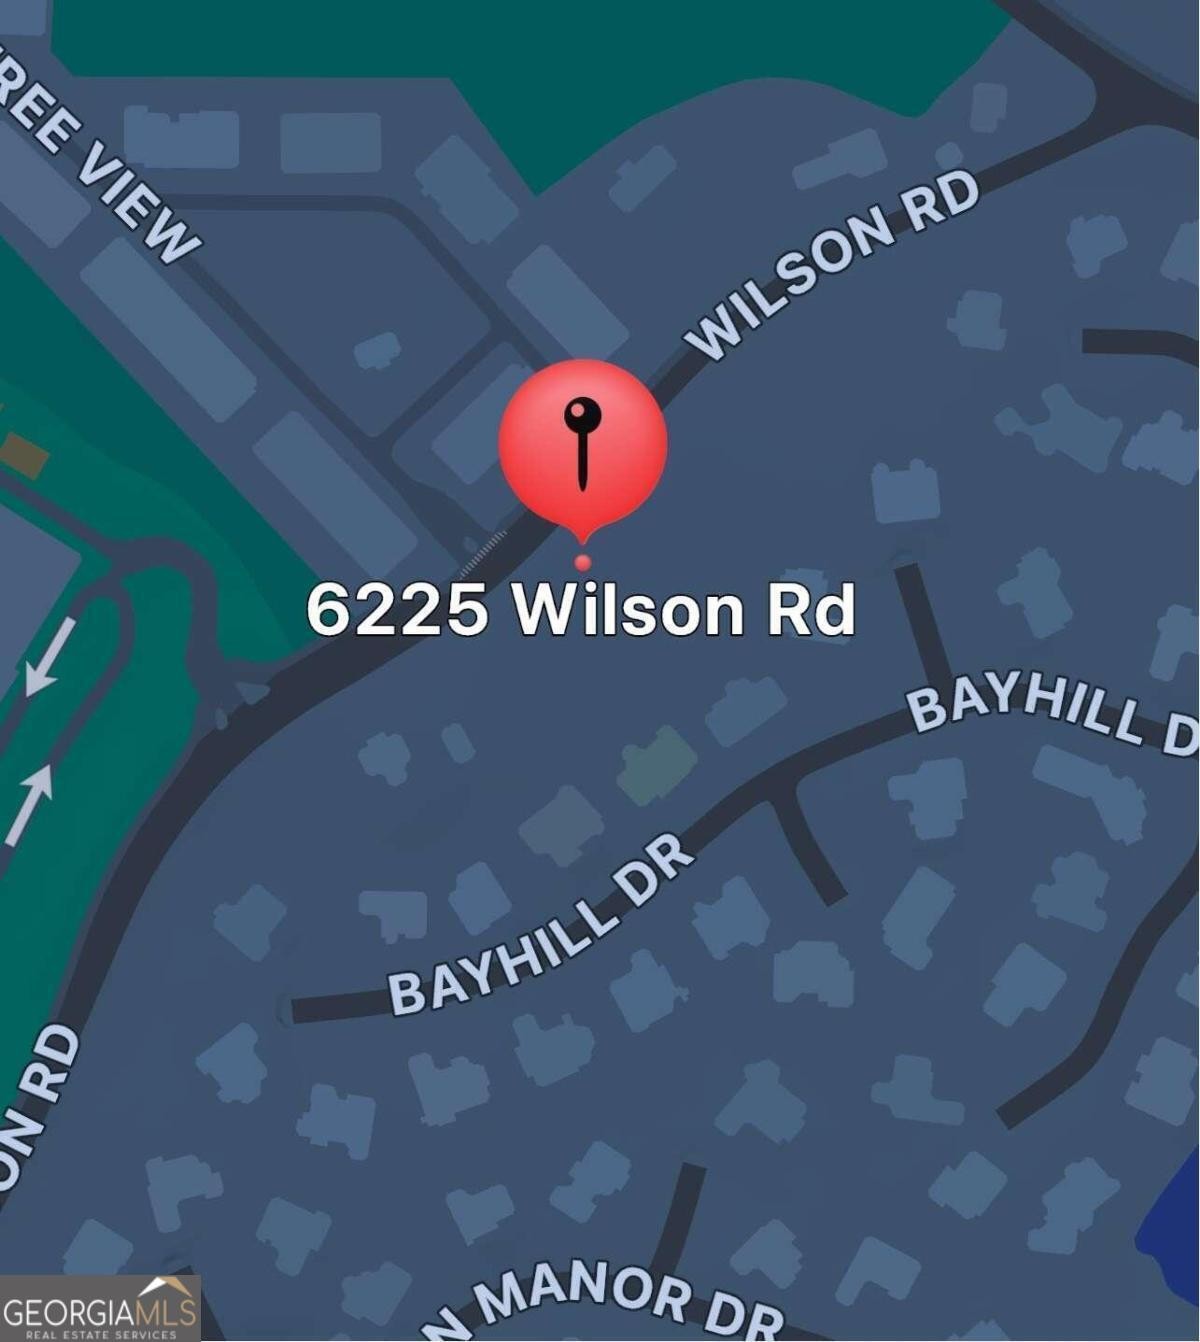 1. 6235 Wilson Rd